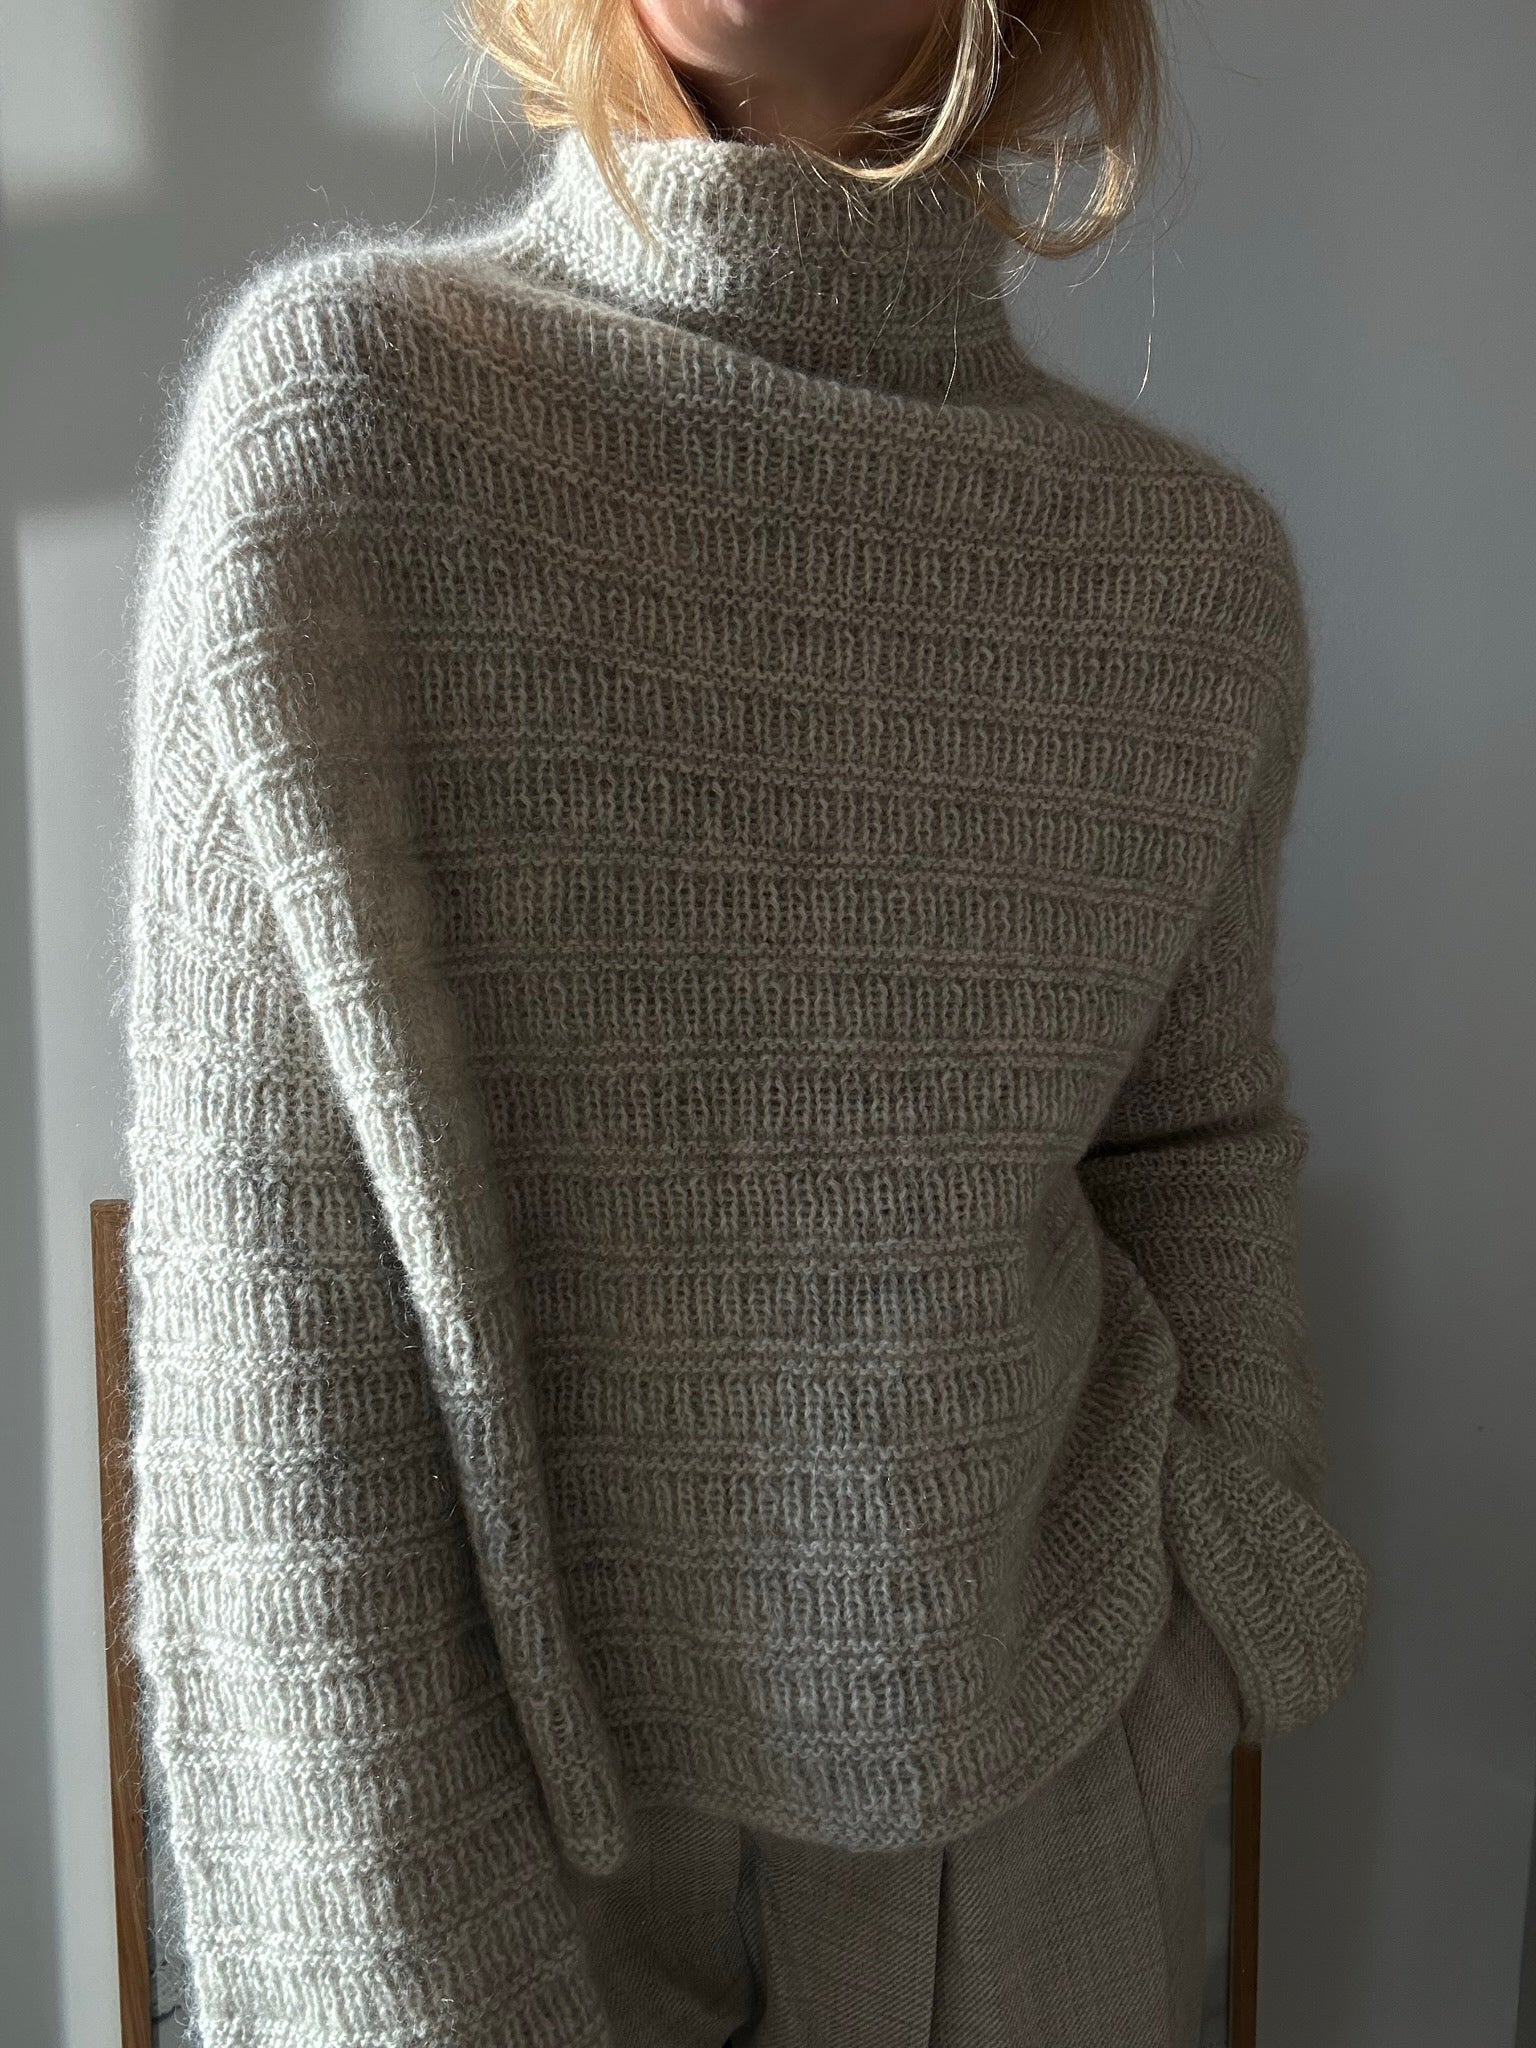 Sweater No. 28 - Knitting Pattern in English – • MY FAVOURITE THINGS •  KNITWEAR